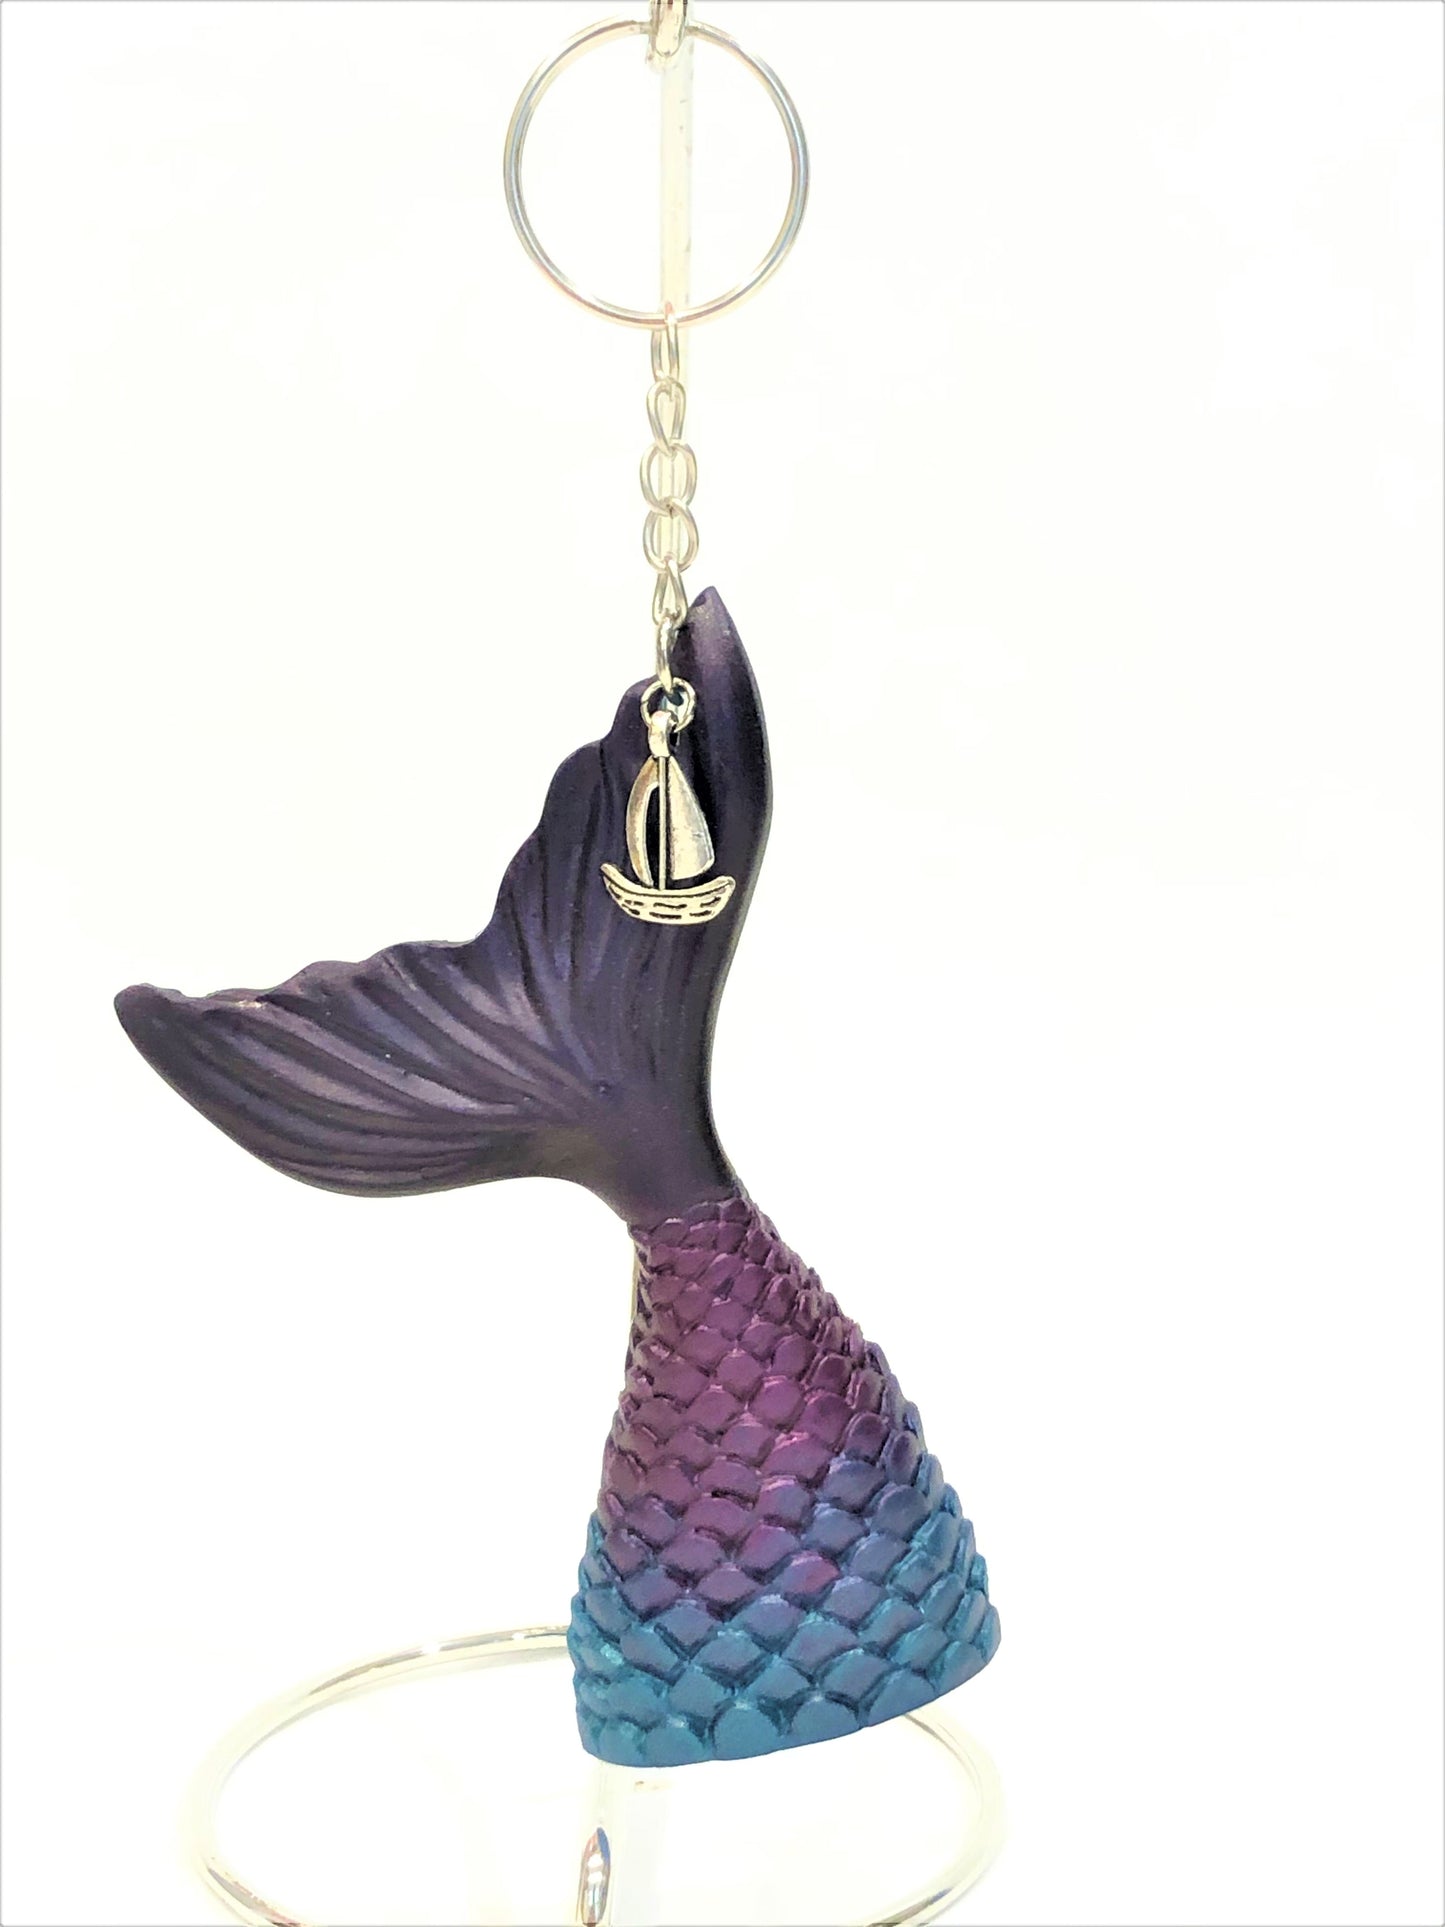 Mermaid Tail Key Chain with Charm